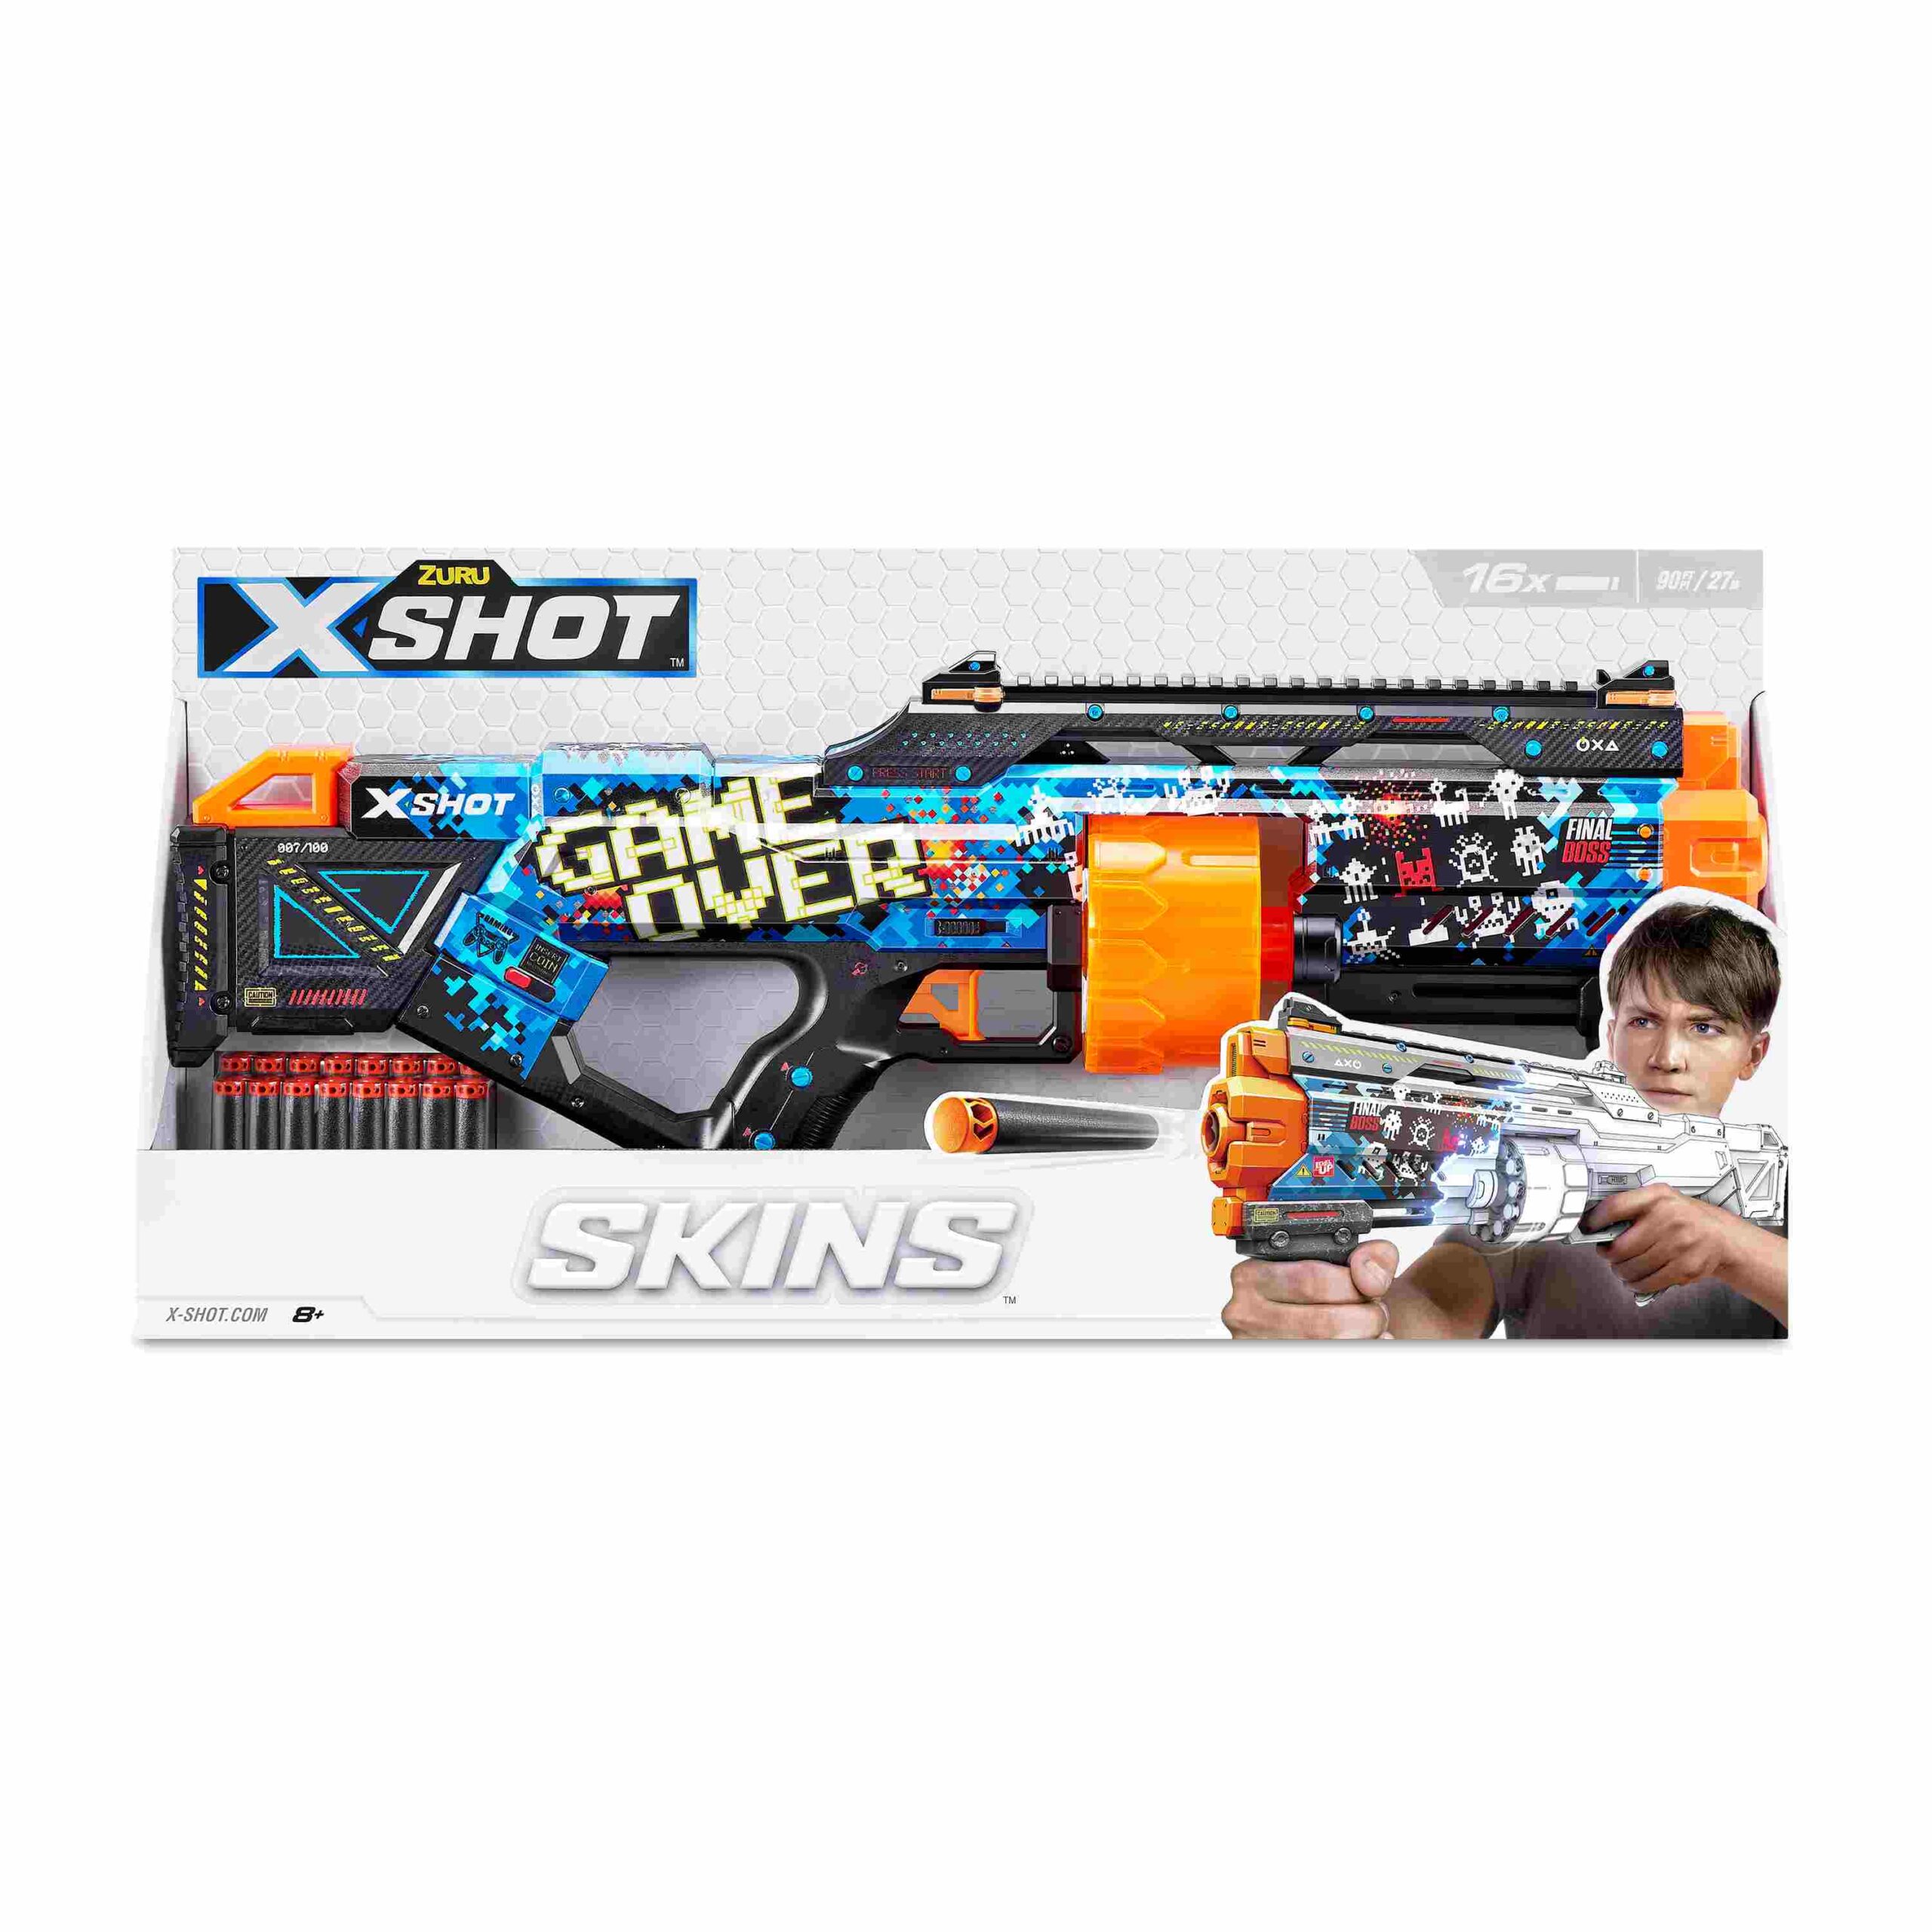 Xshot skins laststand(16 darts) - X-SHOT